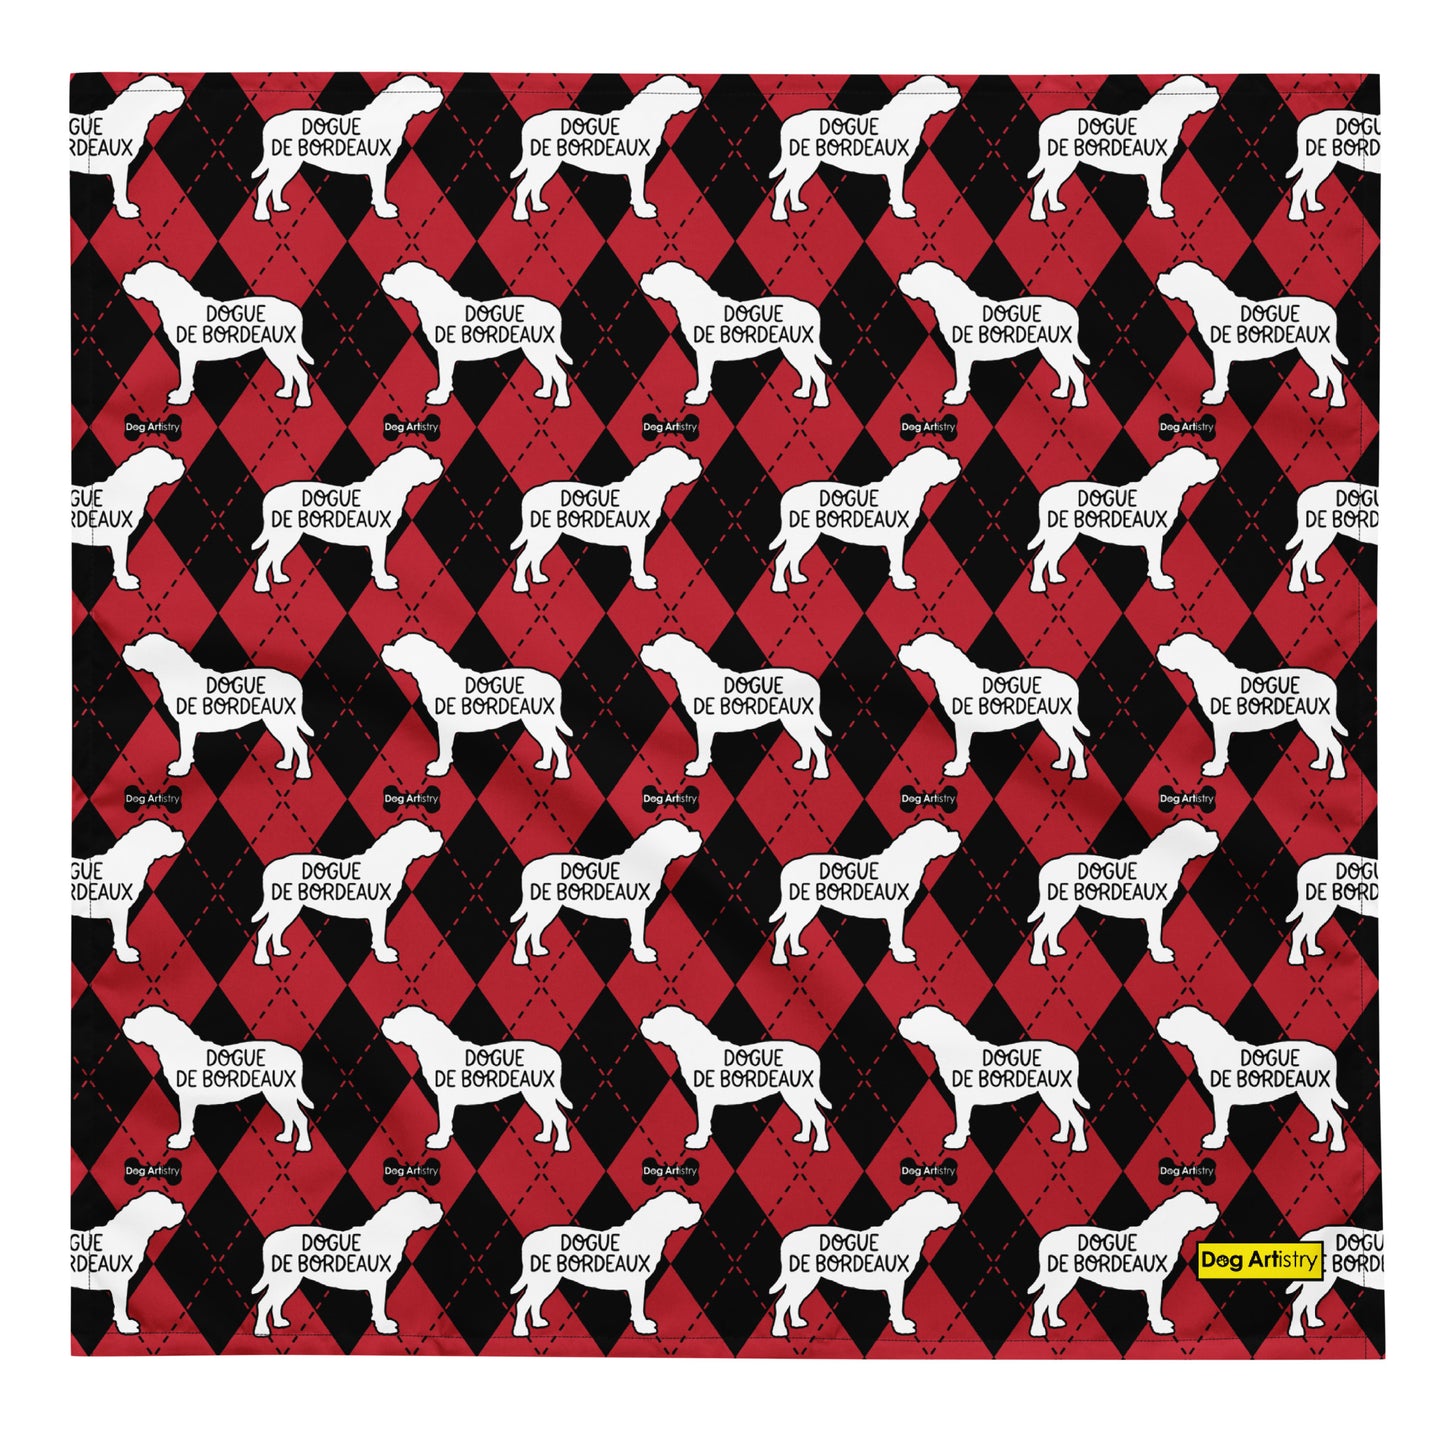 Dogue de Bordeaux Argyle Red and Black All-over print bandana